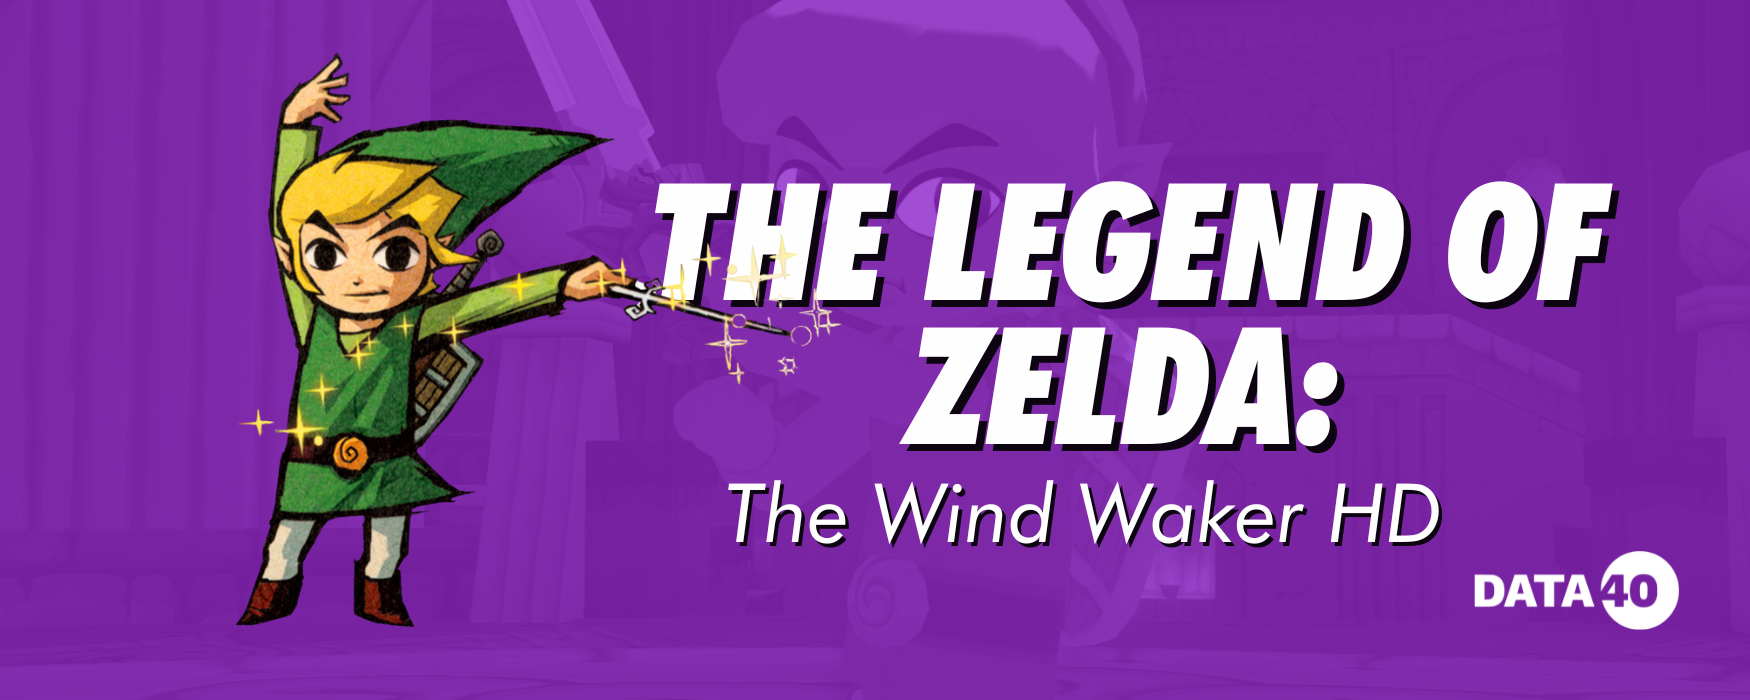 The Legend of Zelda_ The Wind Waker HD